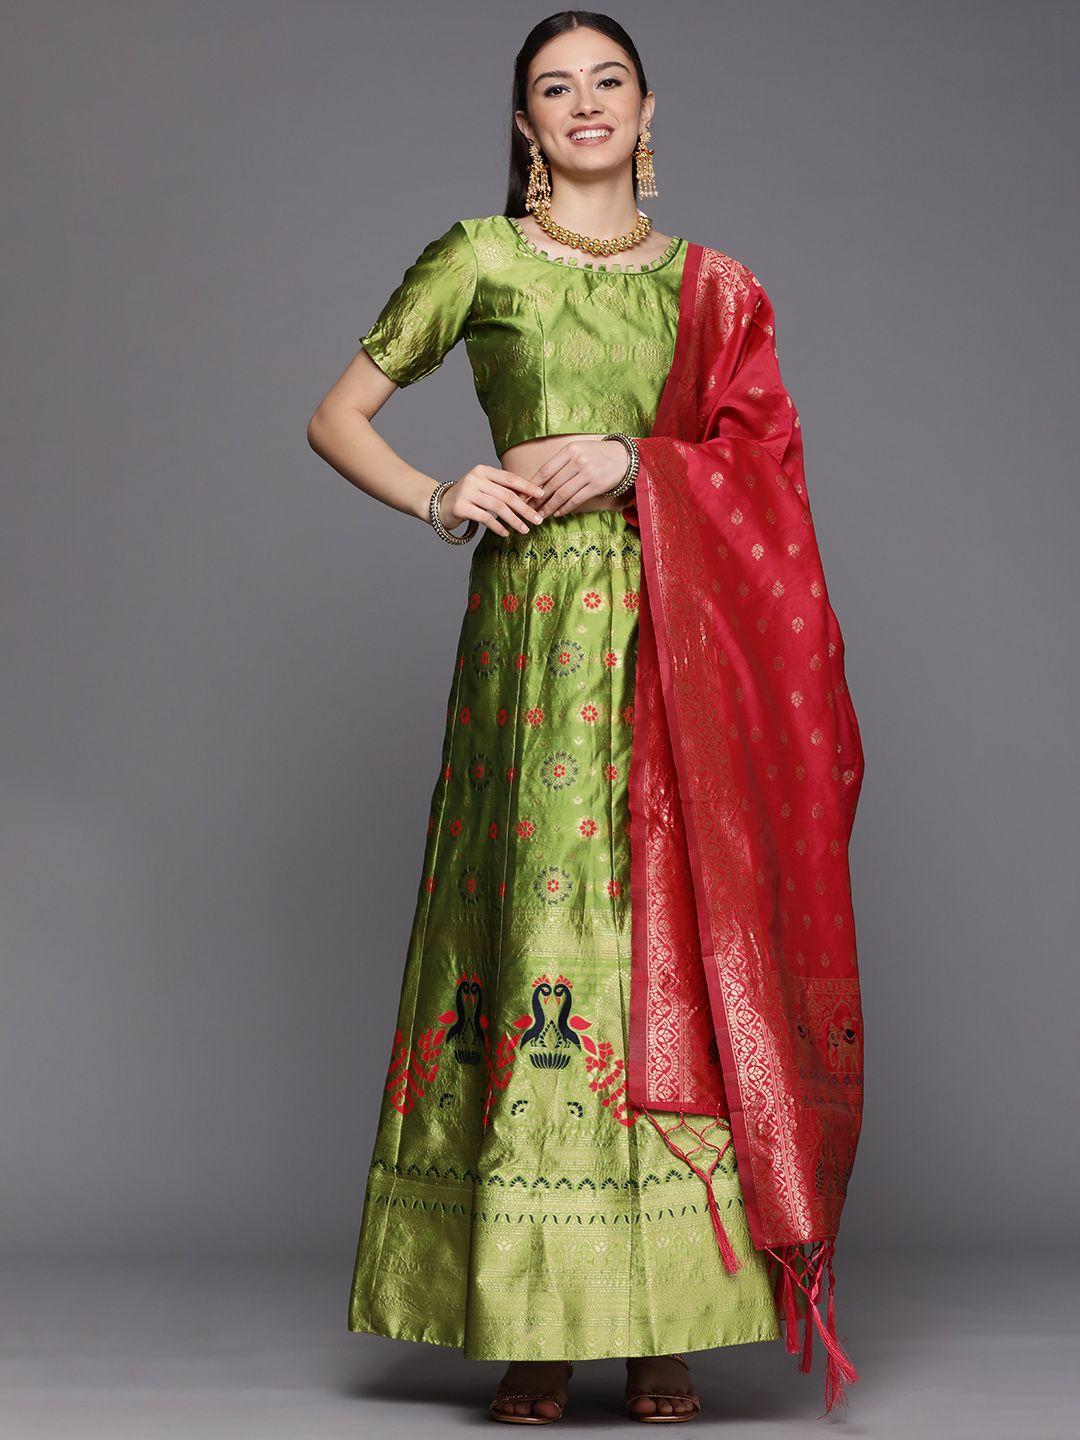 mitera women green & gold-toned batik semi-stitched lehenga unstitched blouse & dupatta